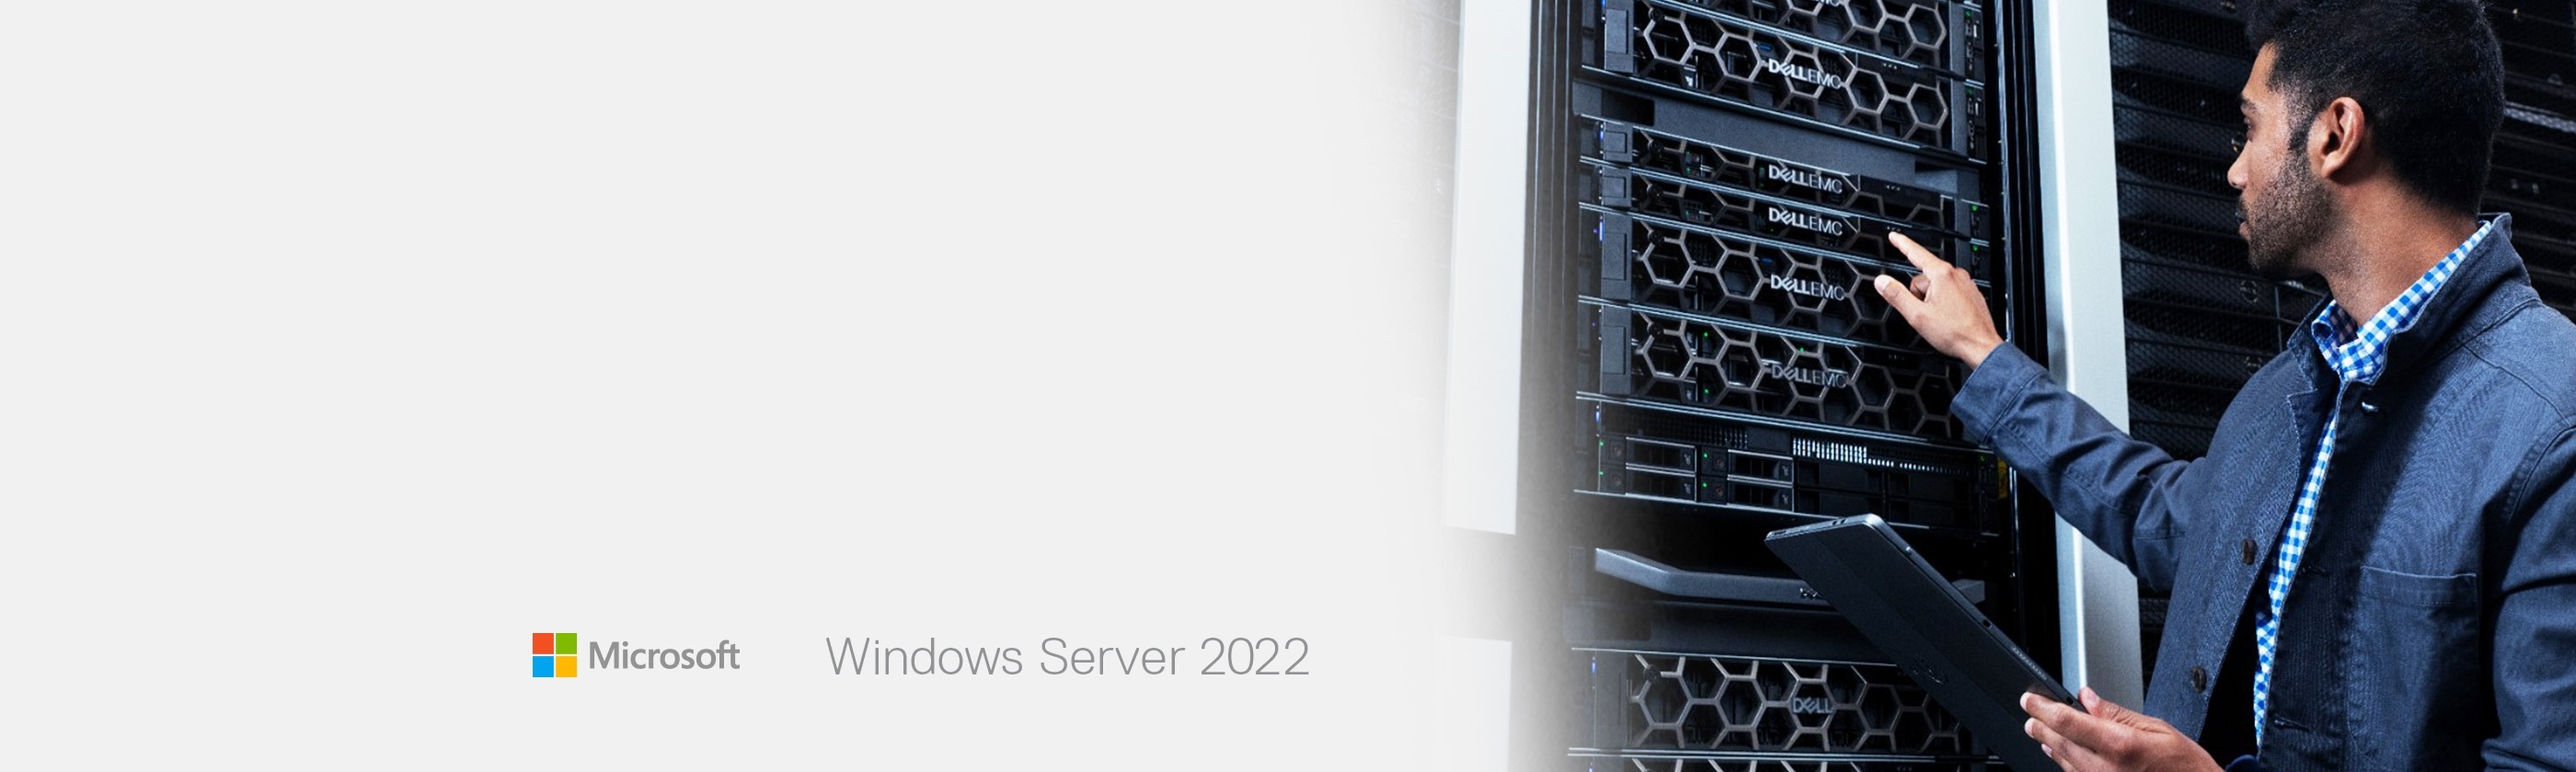 Modernize with Windows Server 2022.